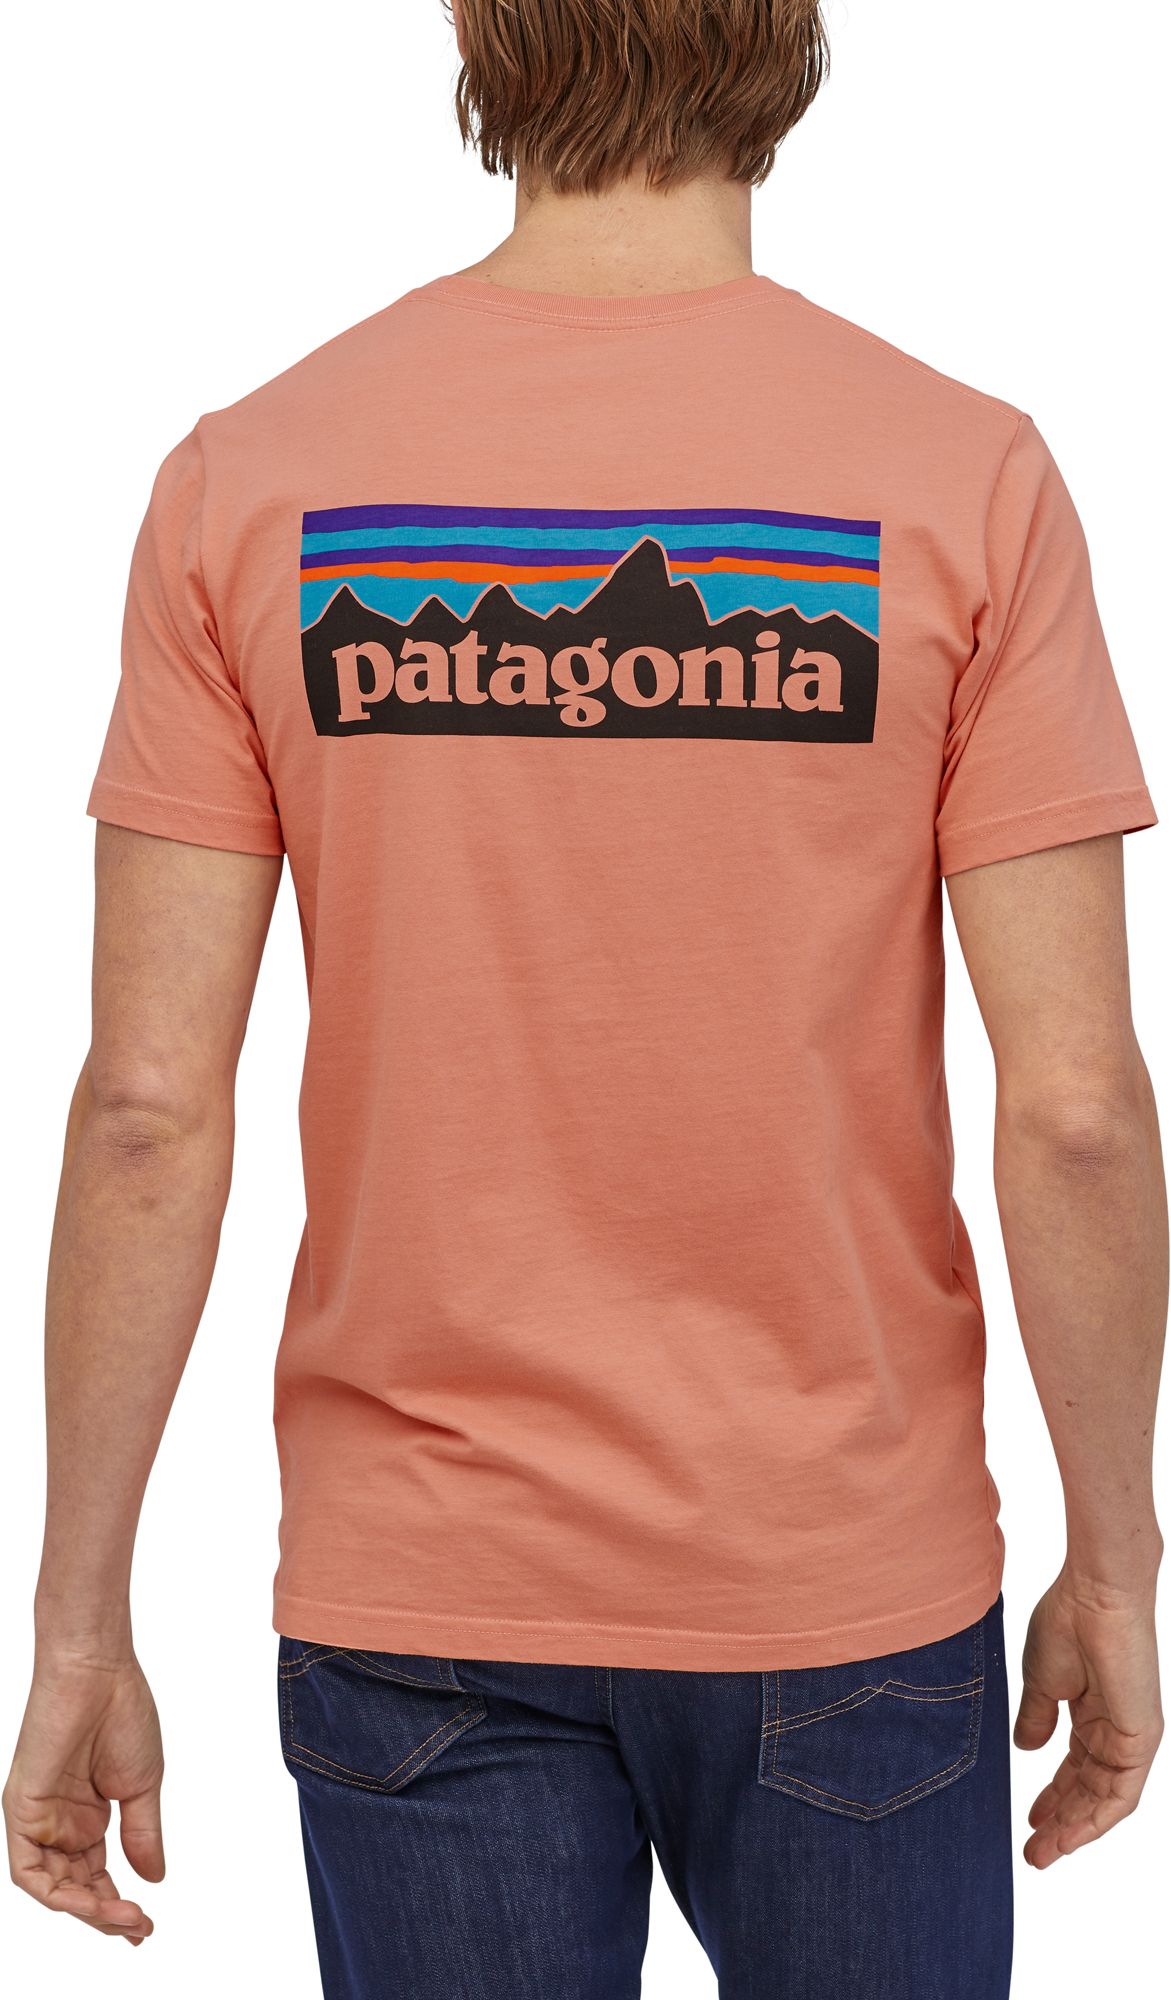 patagonia men's short sleeve shirts